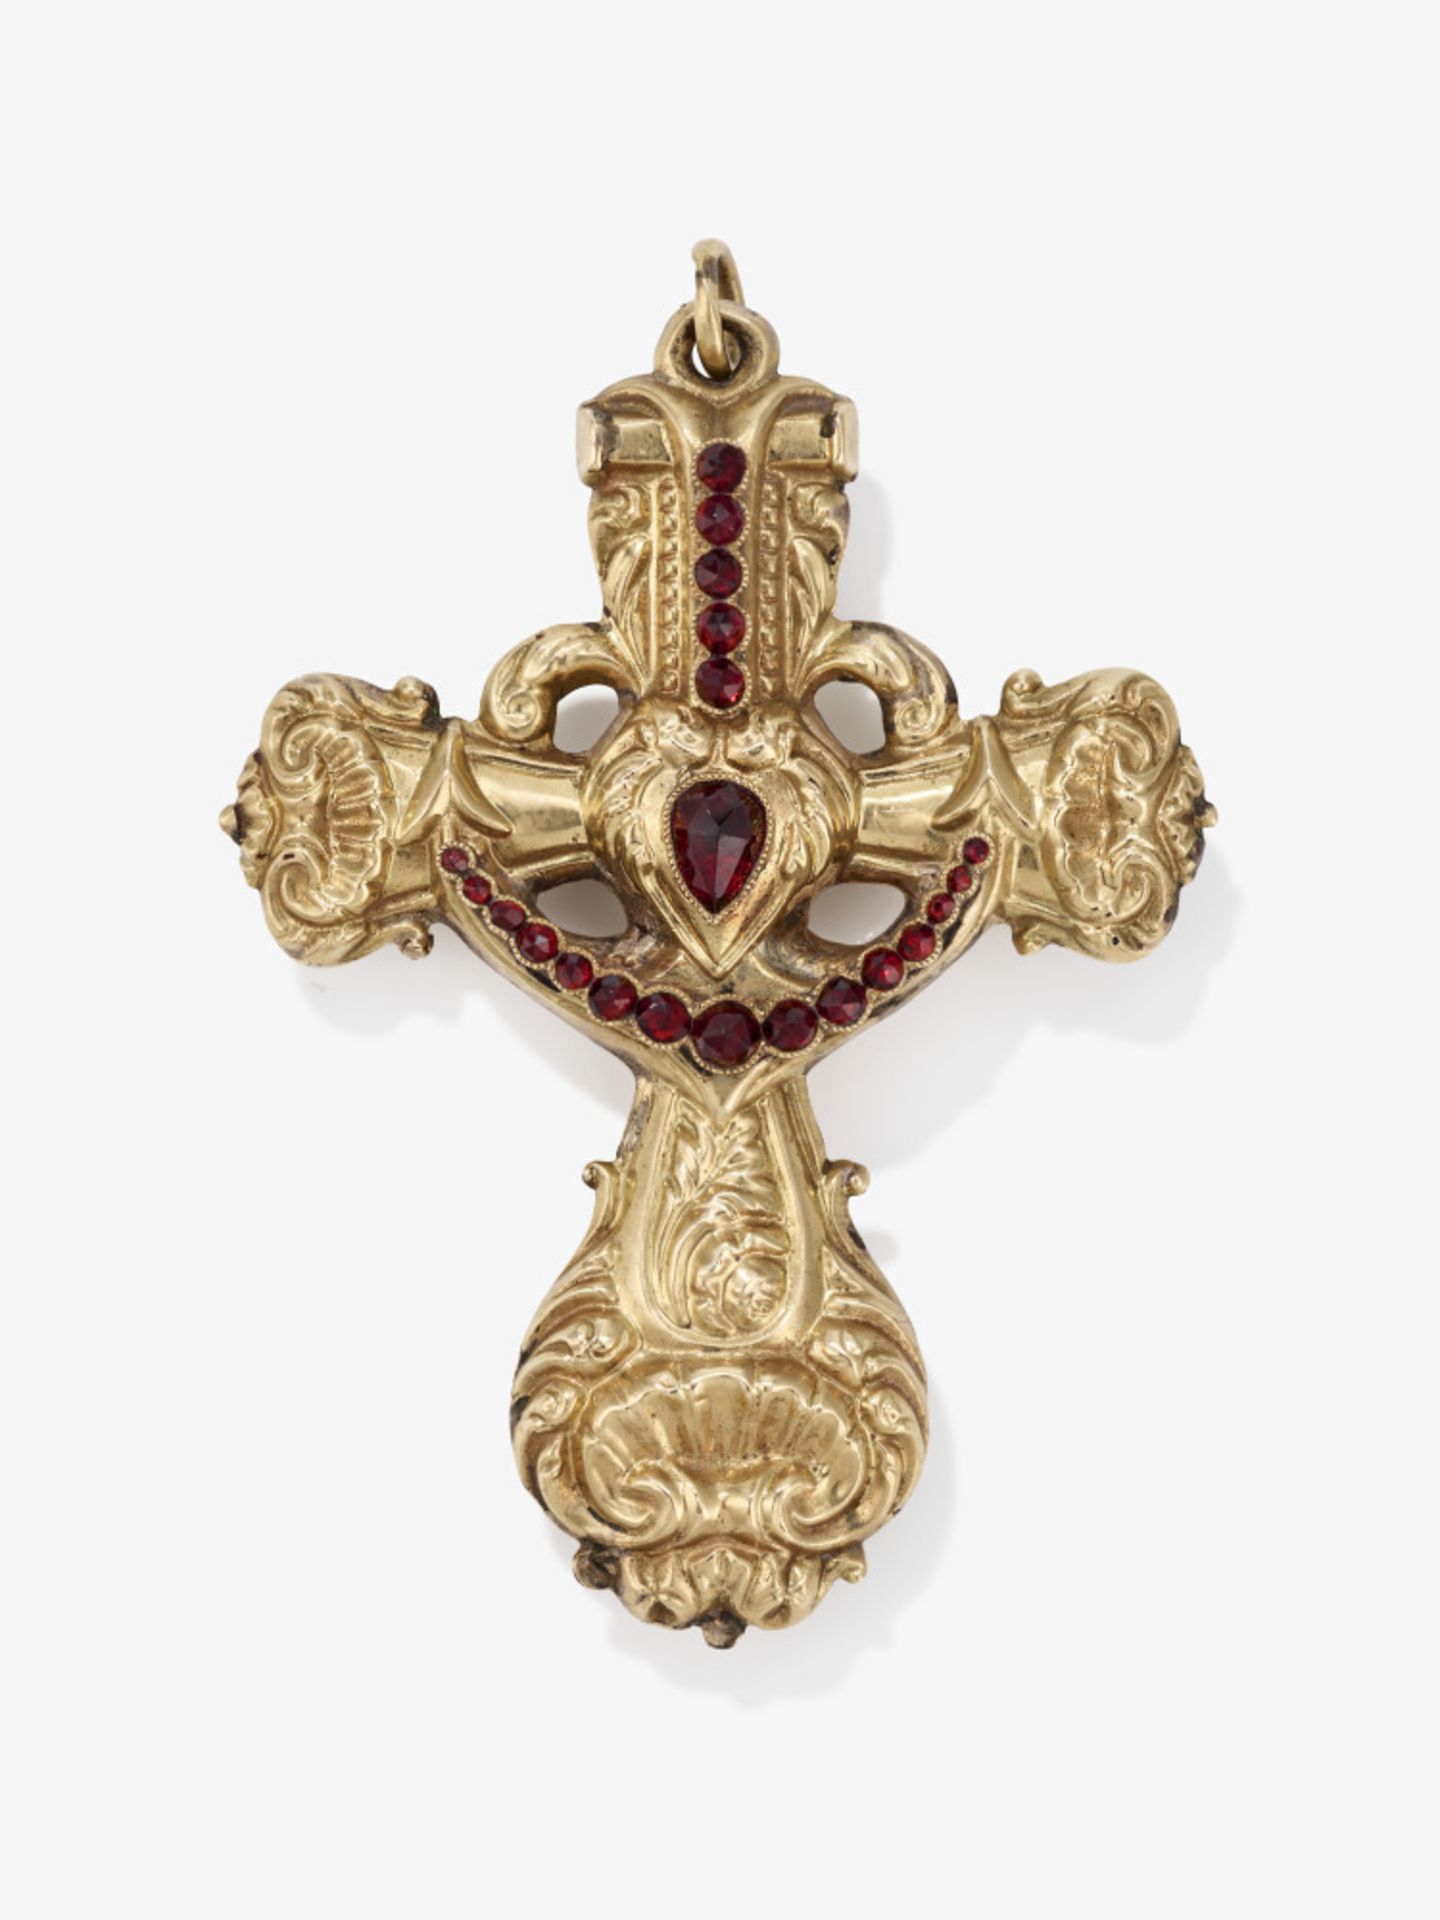 A cross pendant with garnets - Bohemia, circa 1850